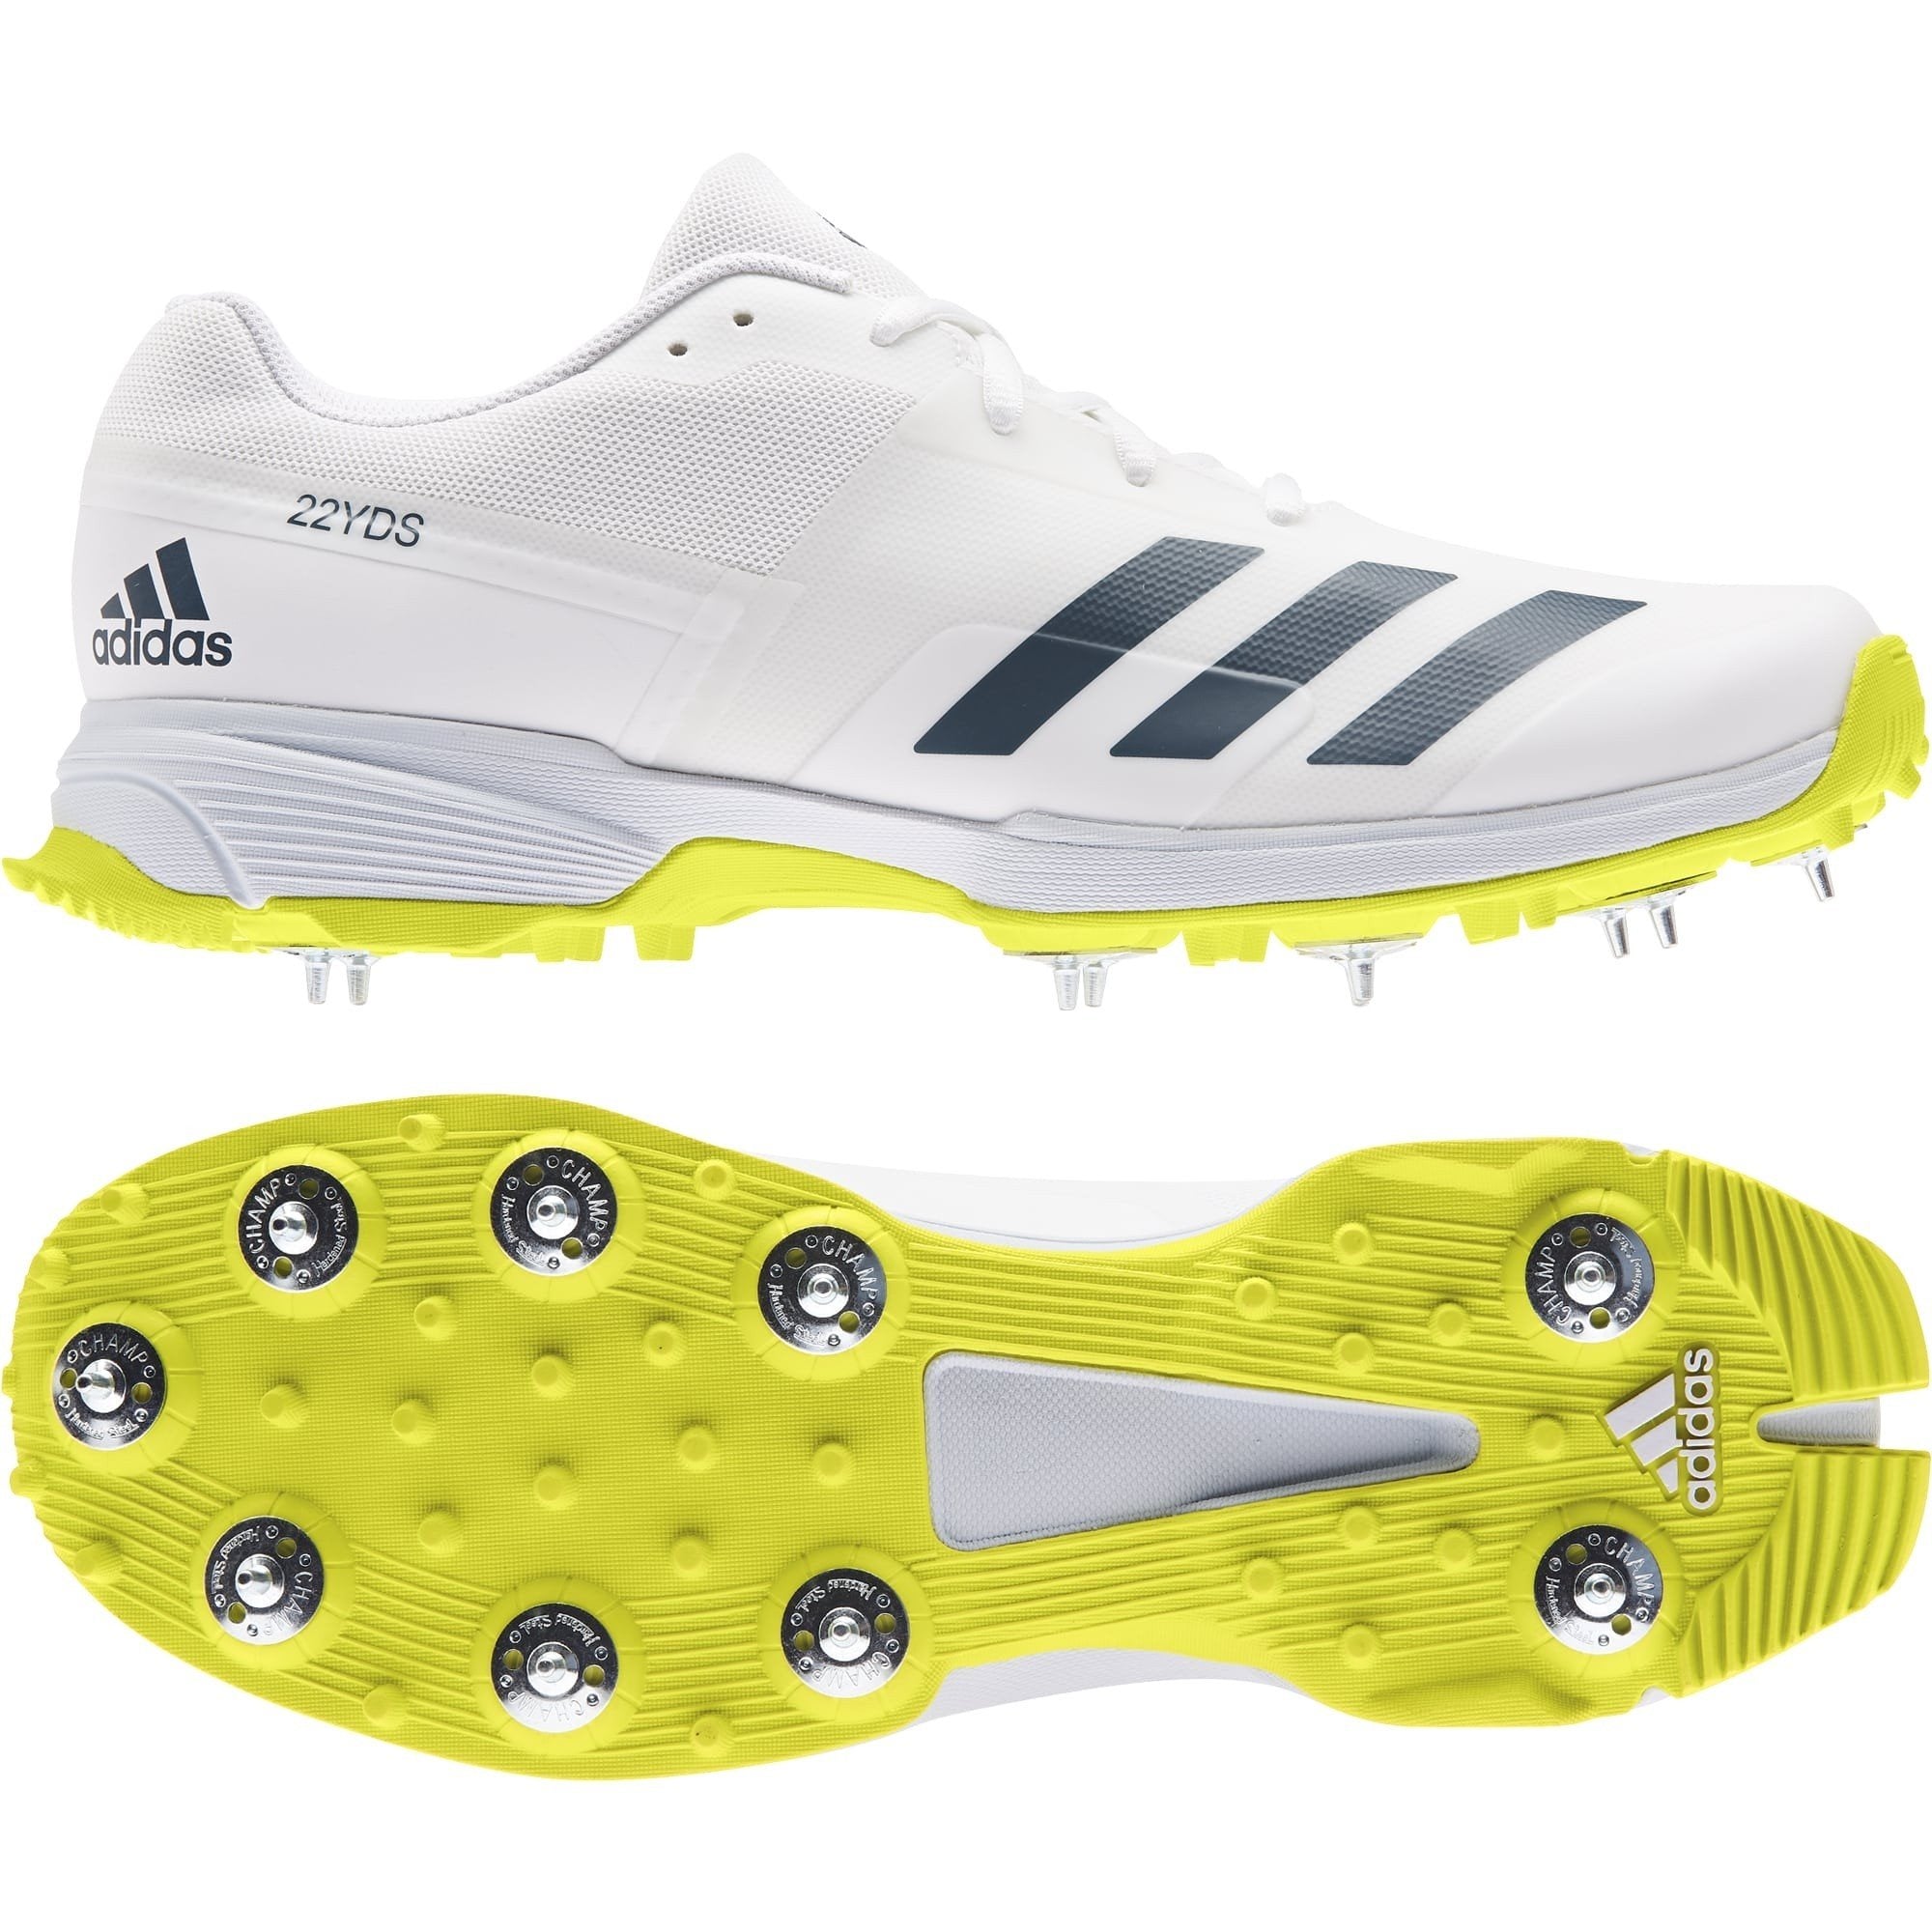 Adidas 22YDS Cricket Spikes White/Yellow-Bruntsfield Sports Online